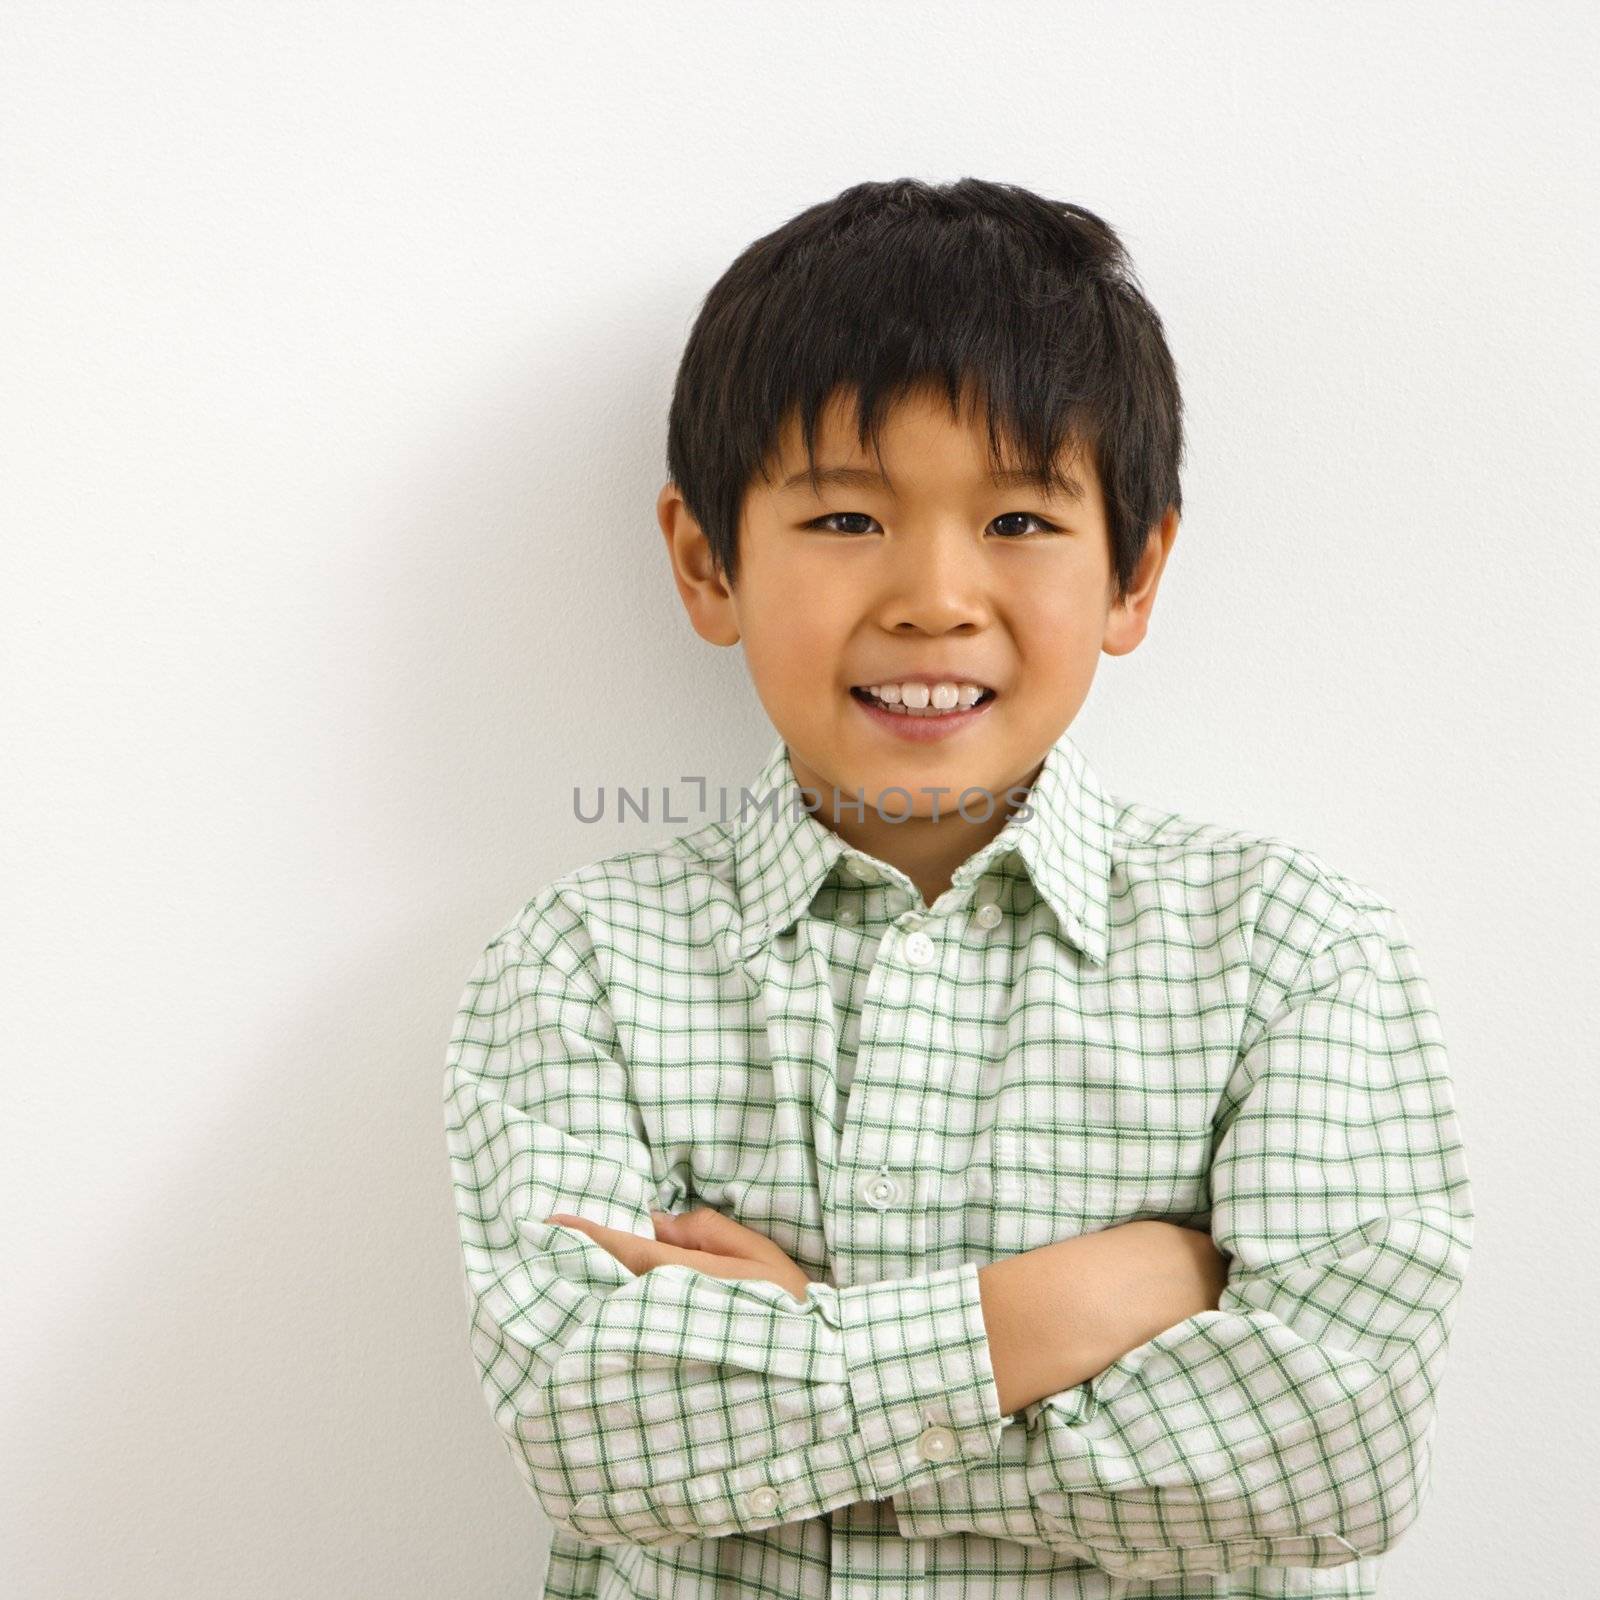 Asian boy portrait by iofoto